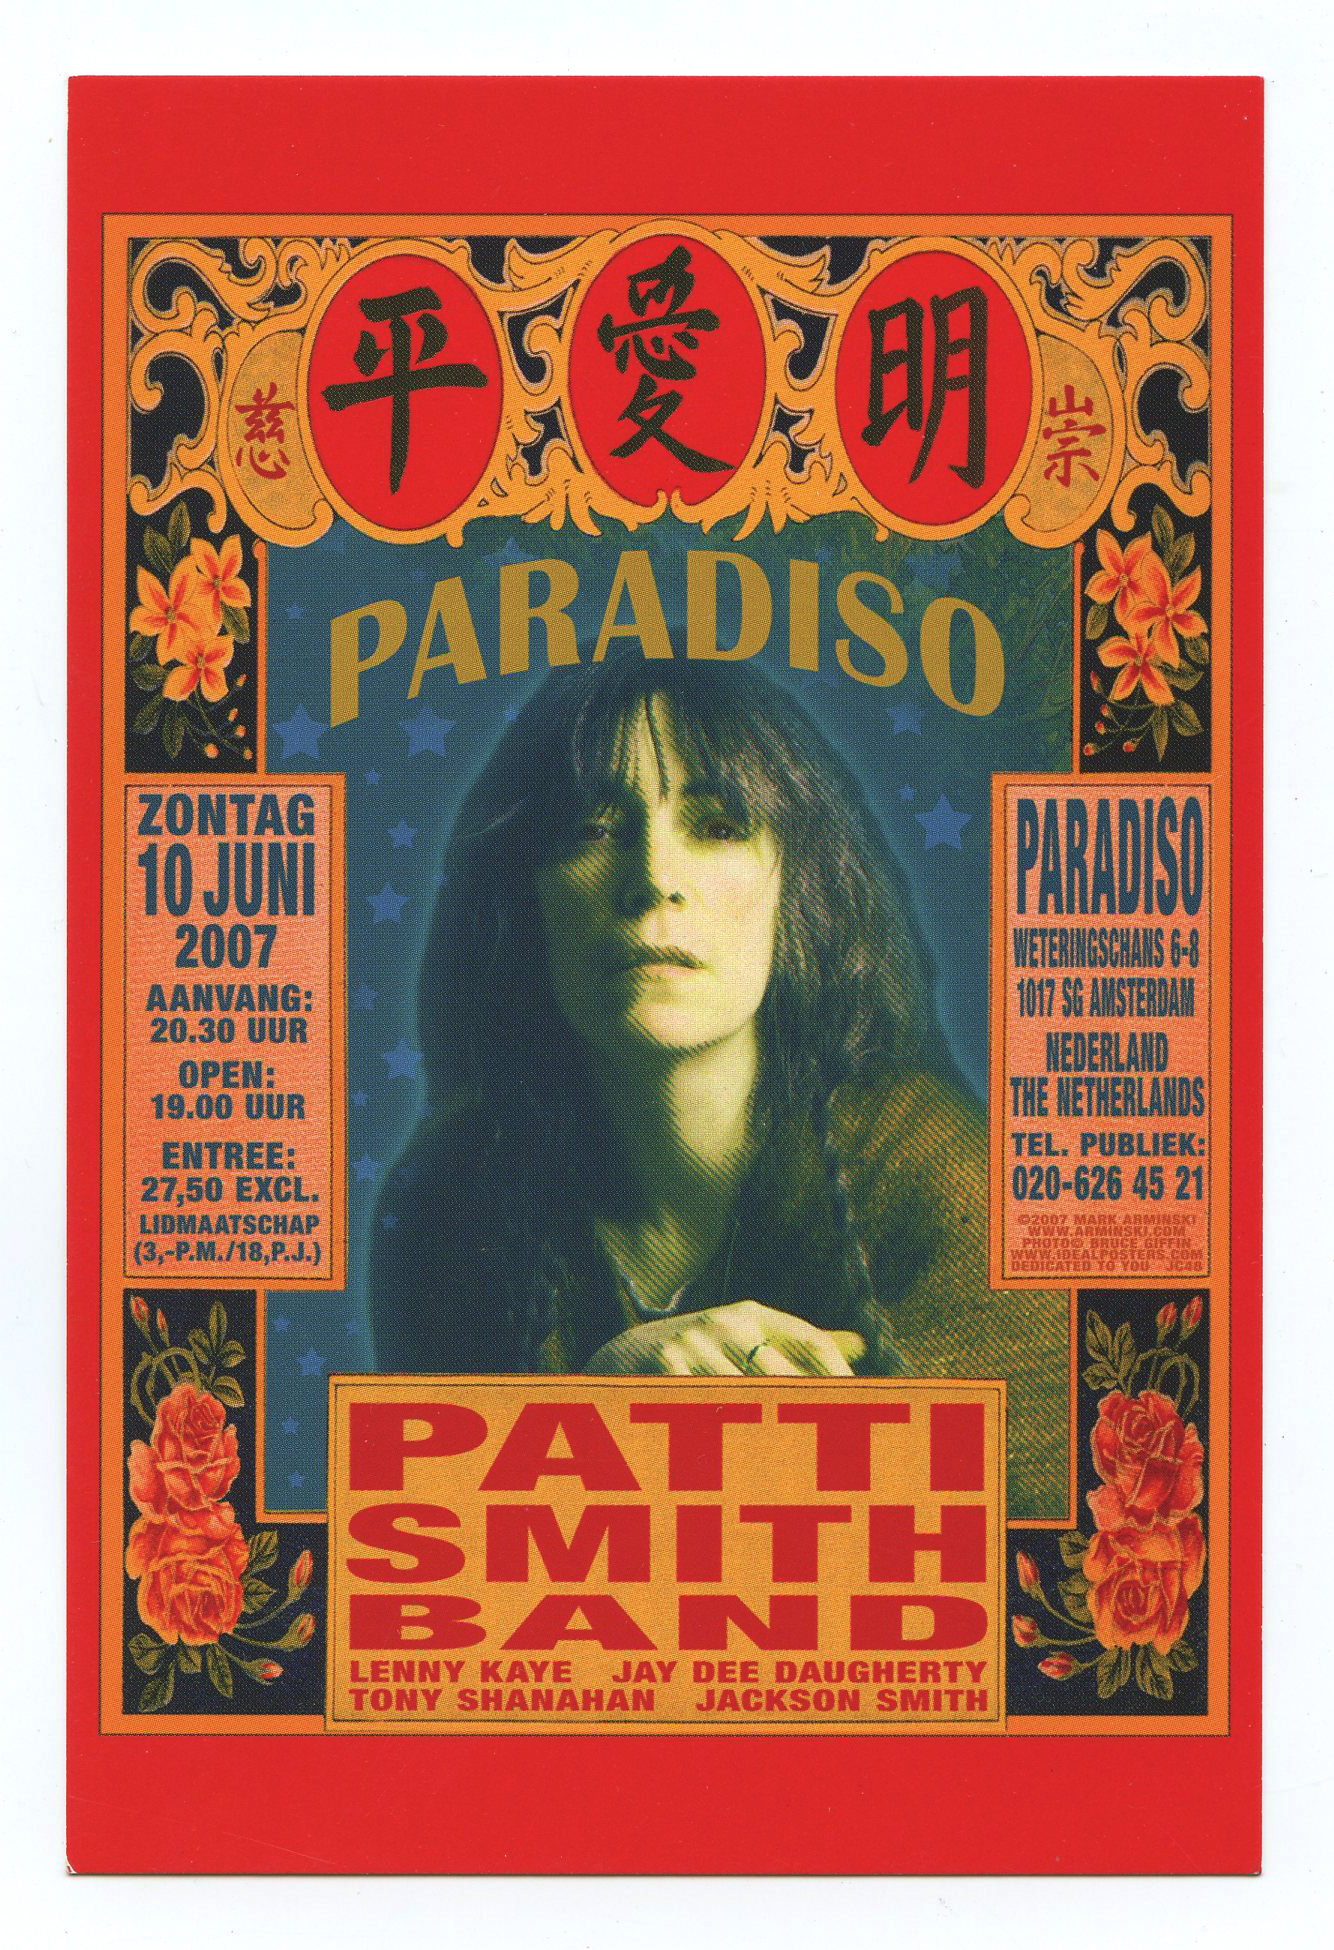 Patti Smith Band Handbill 2007 Jun 10 Paradiso Amsterdam